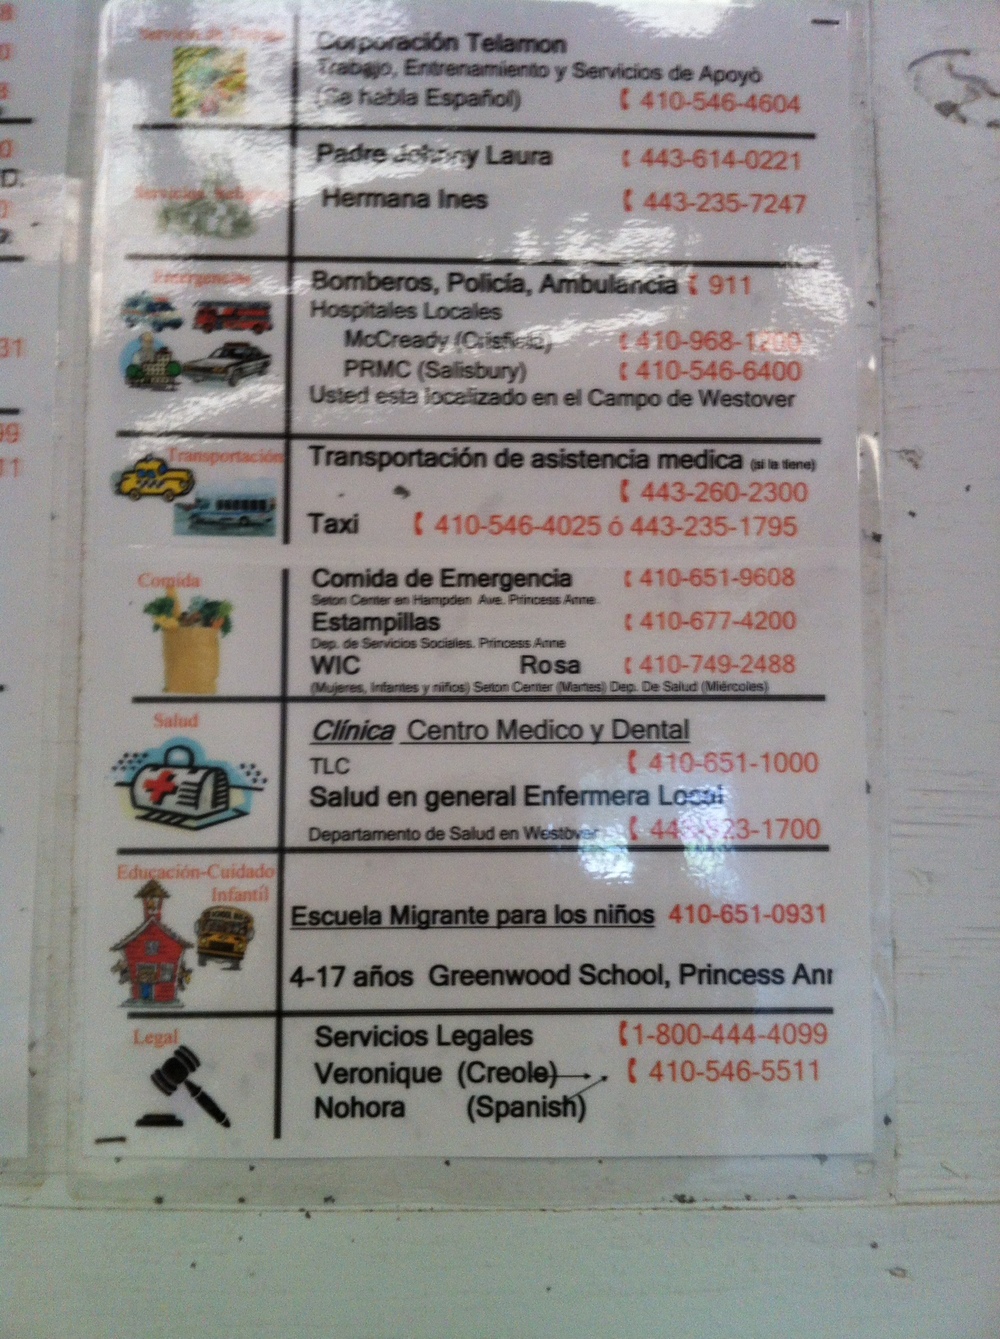 Information in Spanish